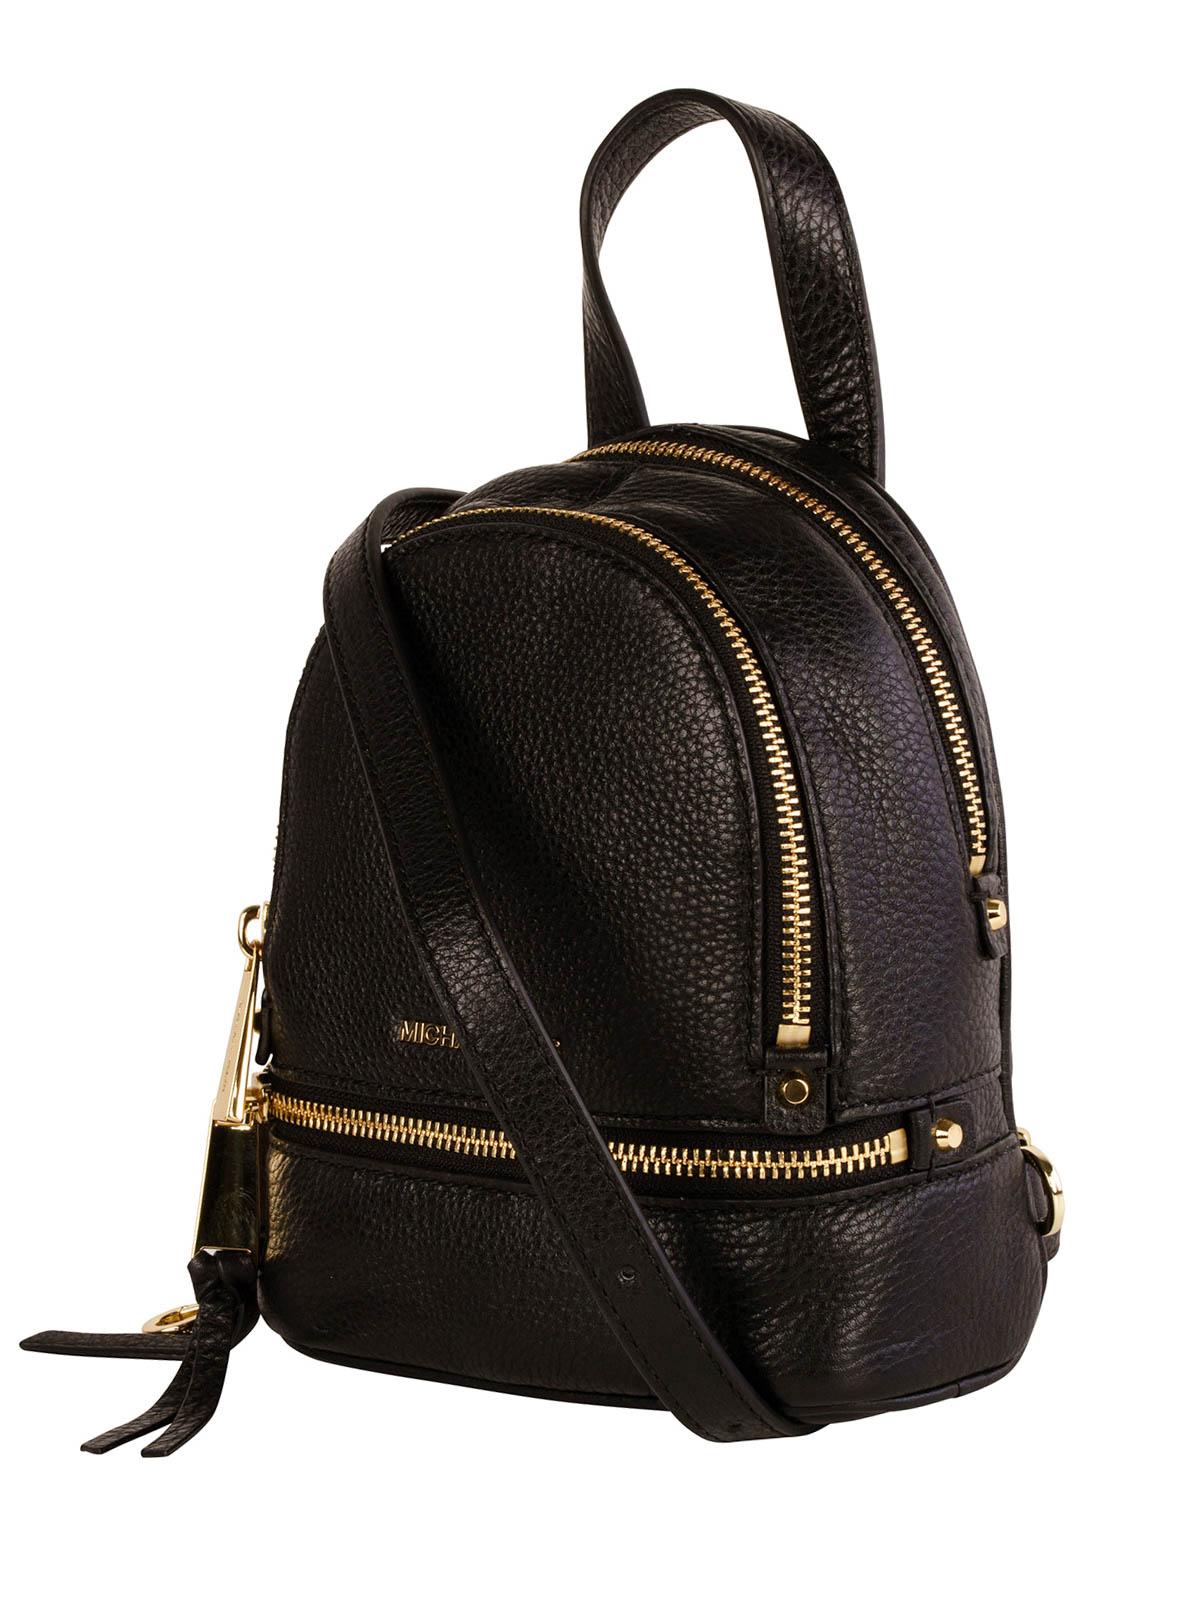 michael kors rhea black backpack